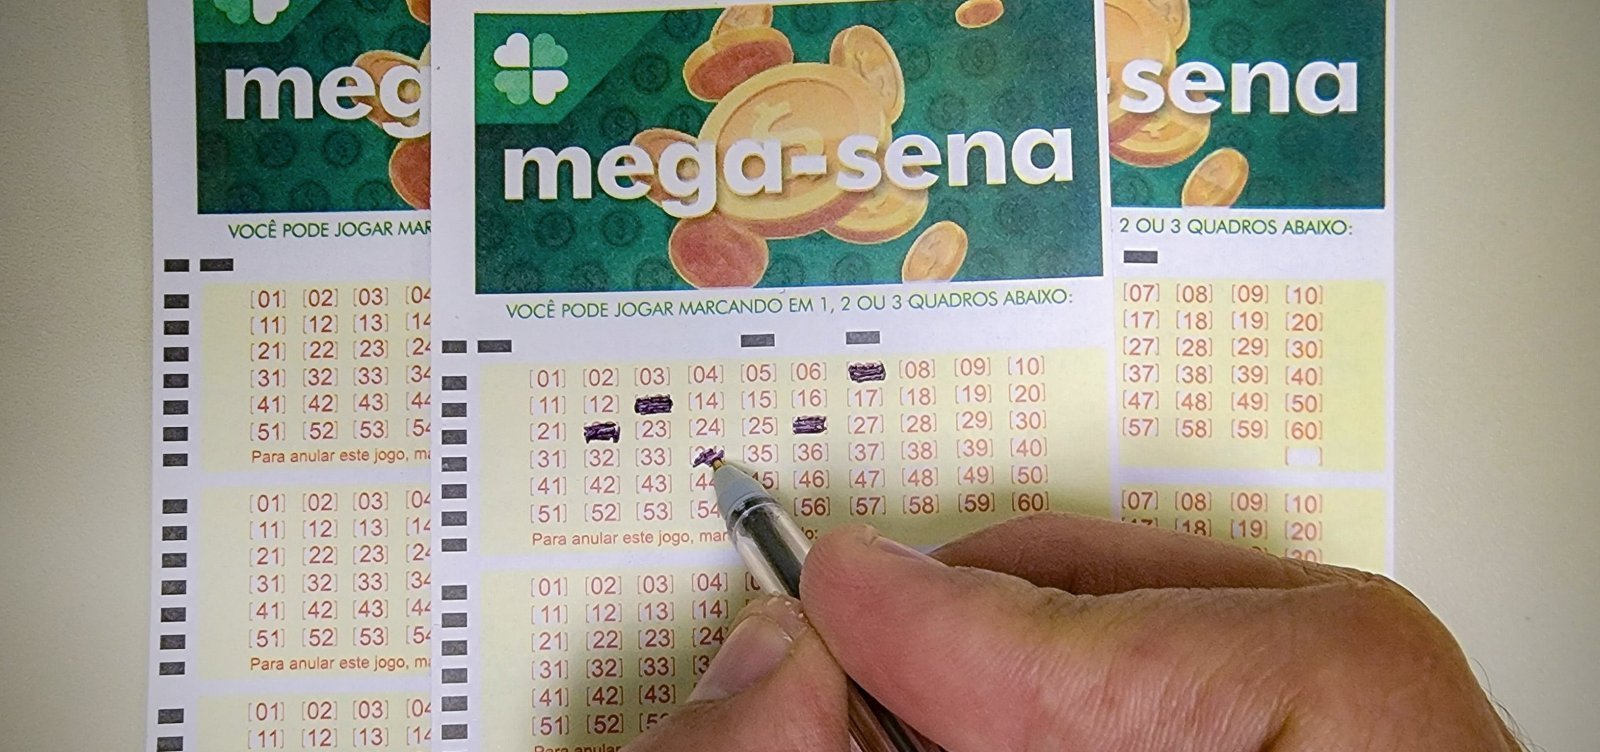 Mega-Sena vai sortear R$ 2,5 milhões nesta terça-feira 